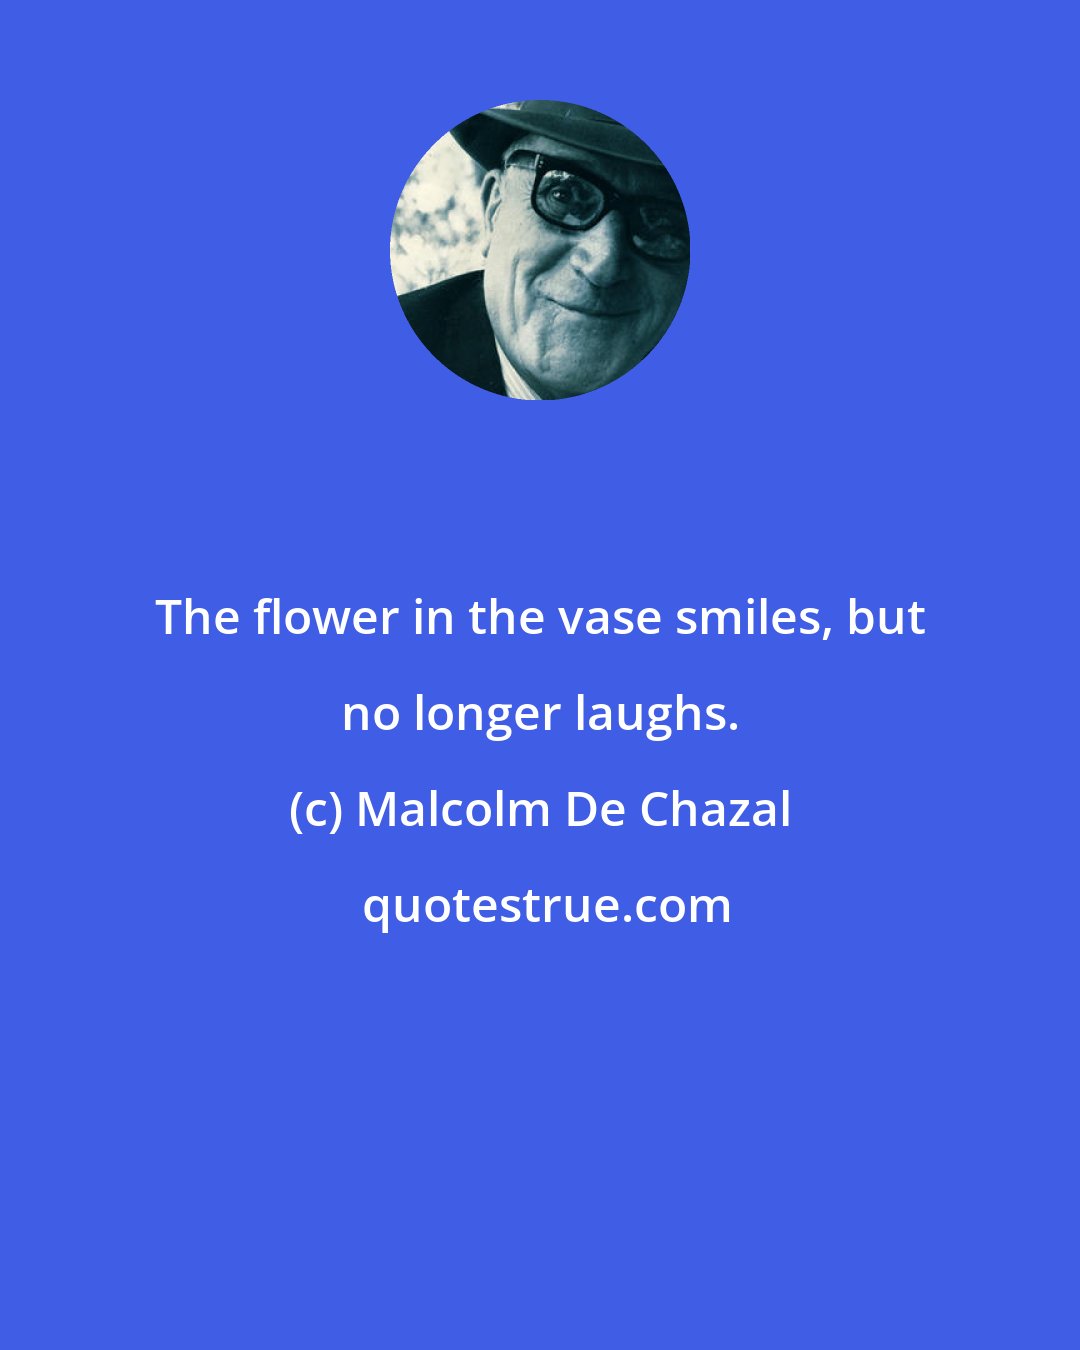 Malcolm De Chazal: The flower in the vase smiles, but no longer laughs.